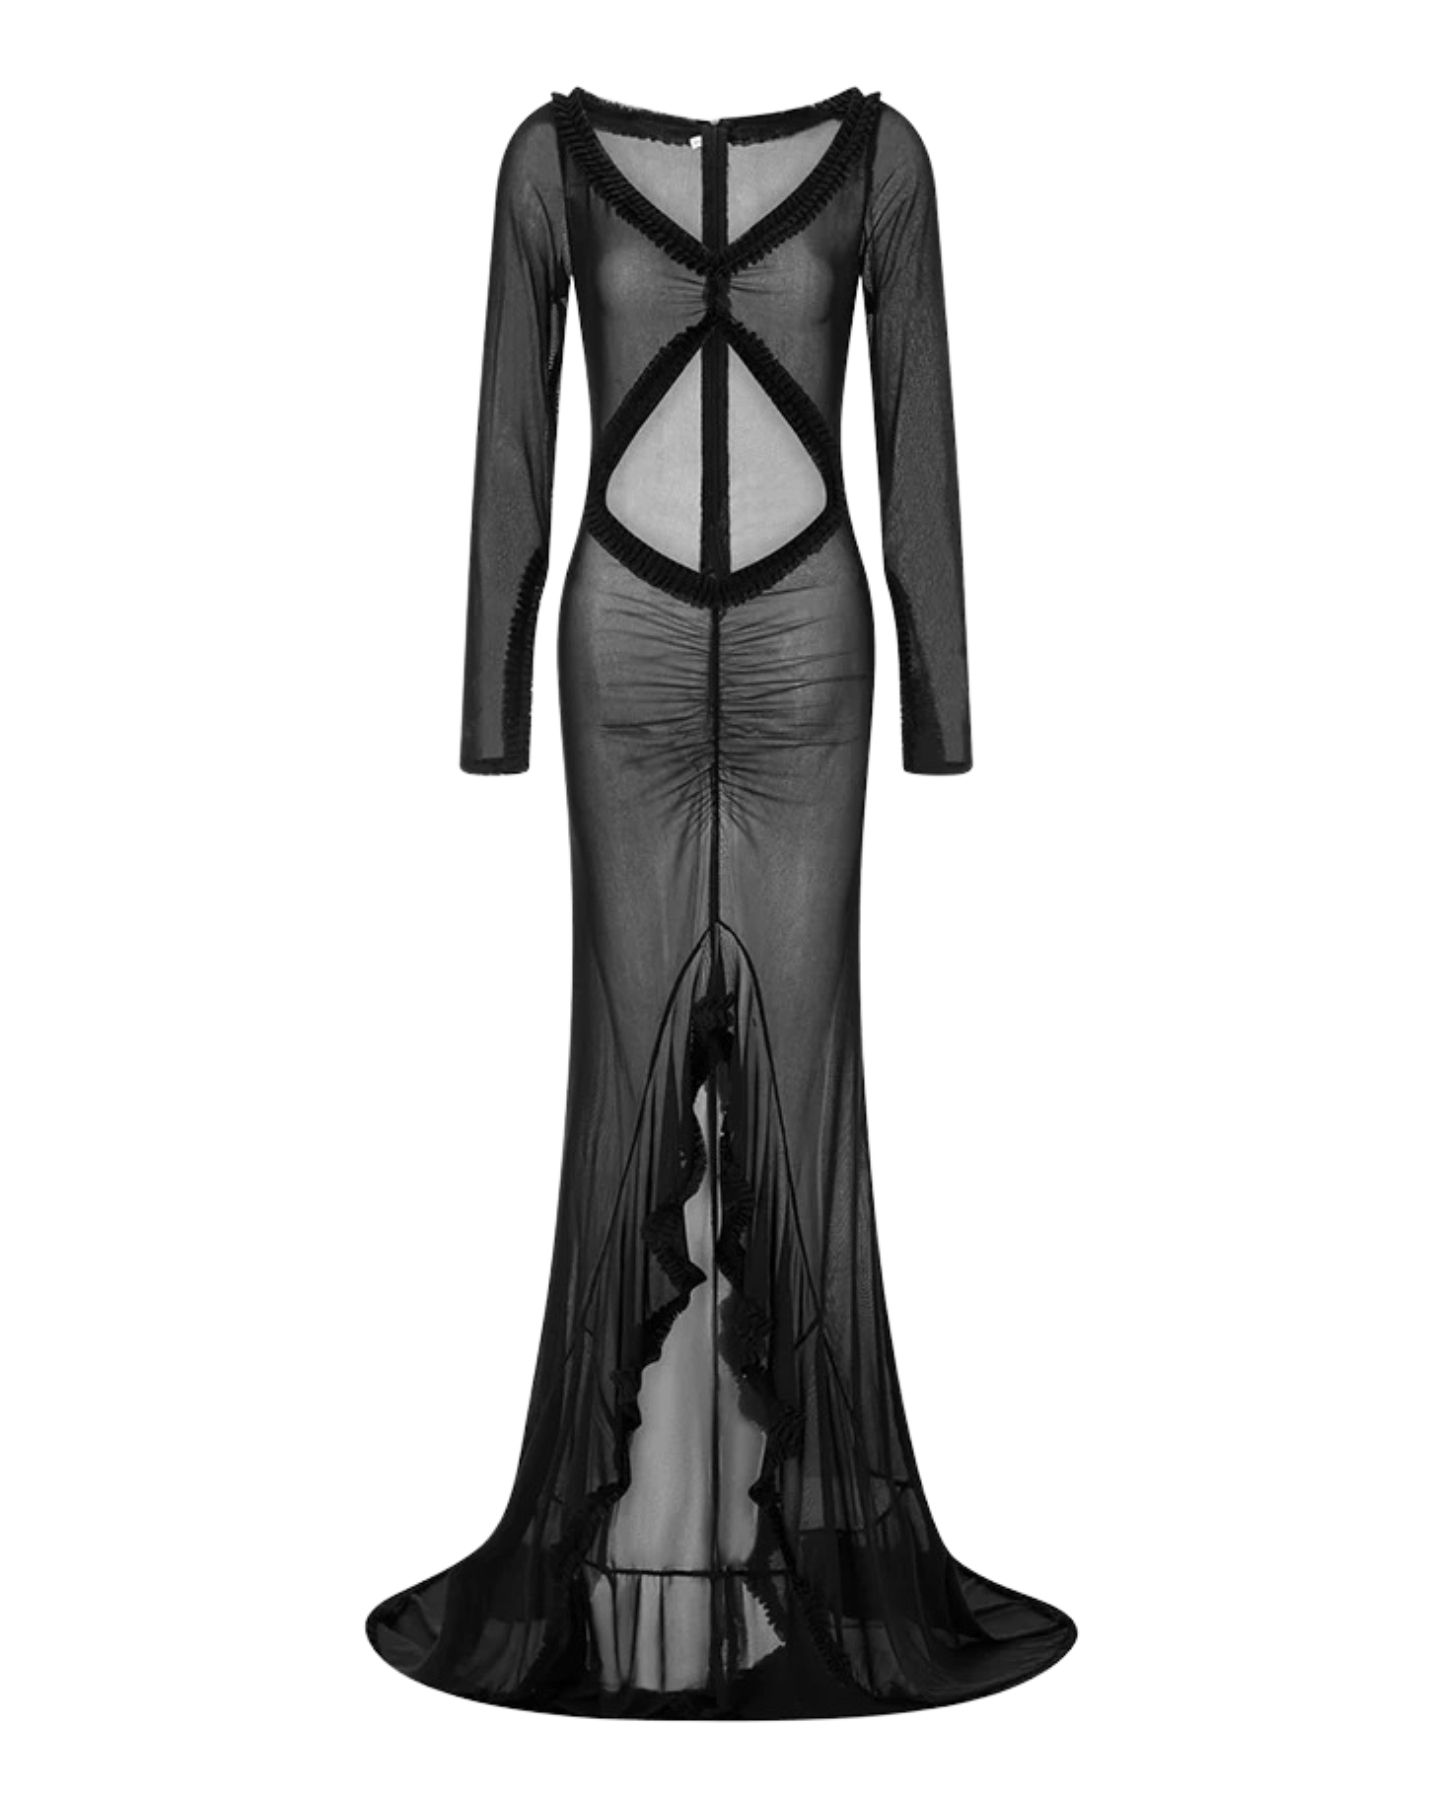 The Mirenna Sheer Maxi Dress